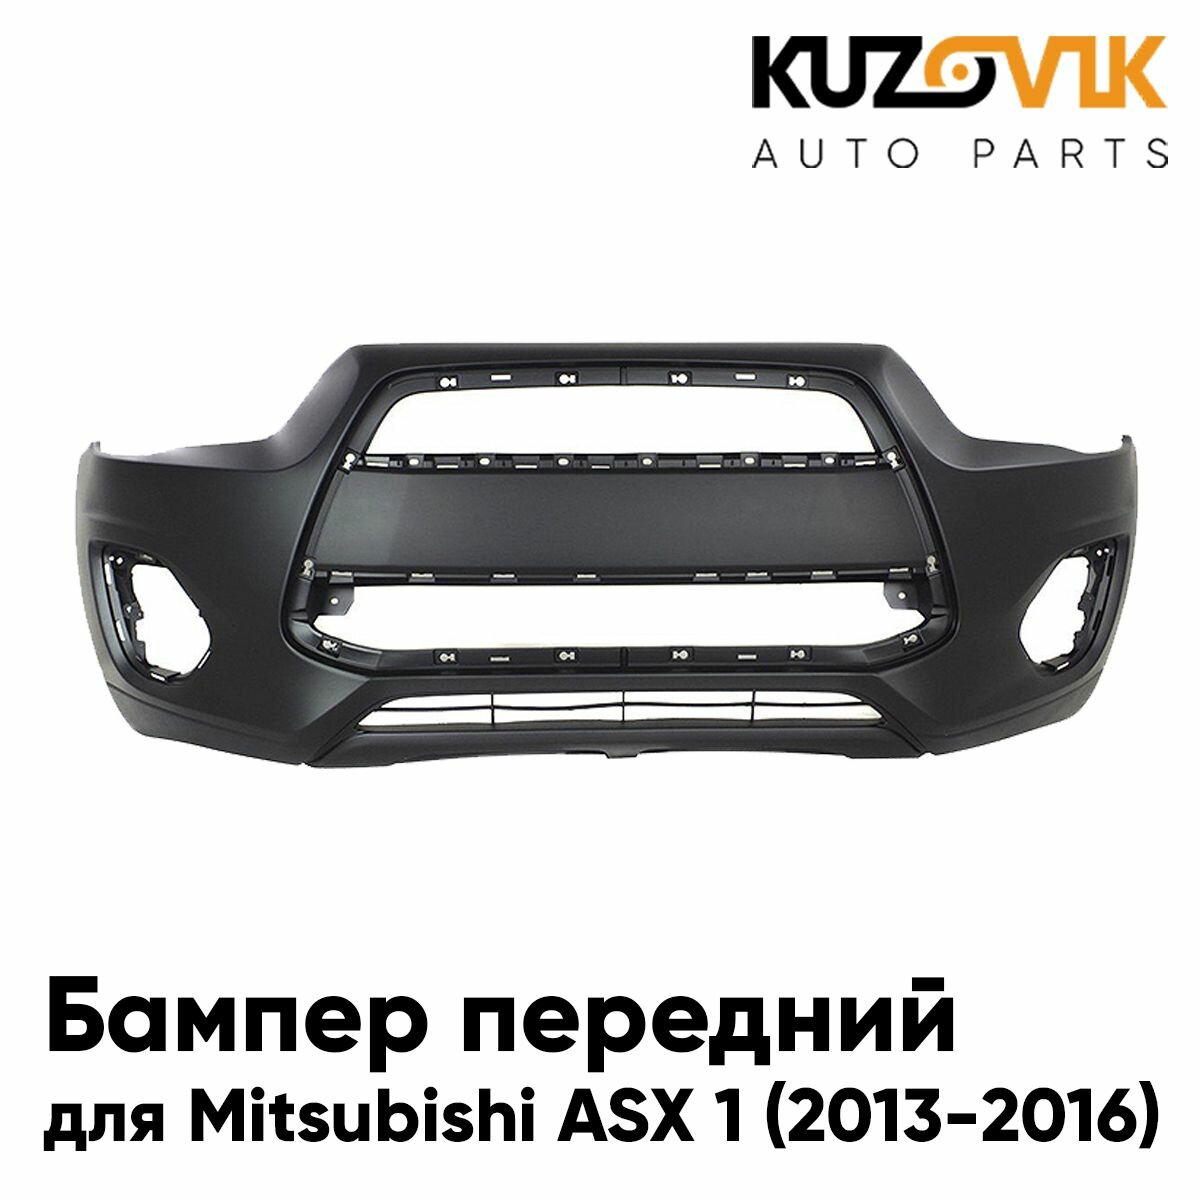 Бампер передний Mitsubishi ASX (2010-2013)